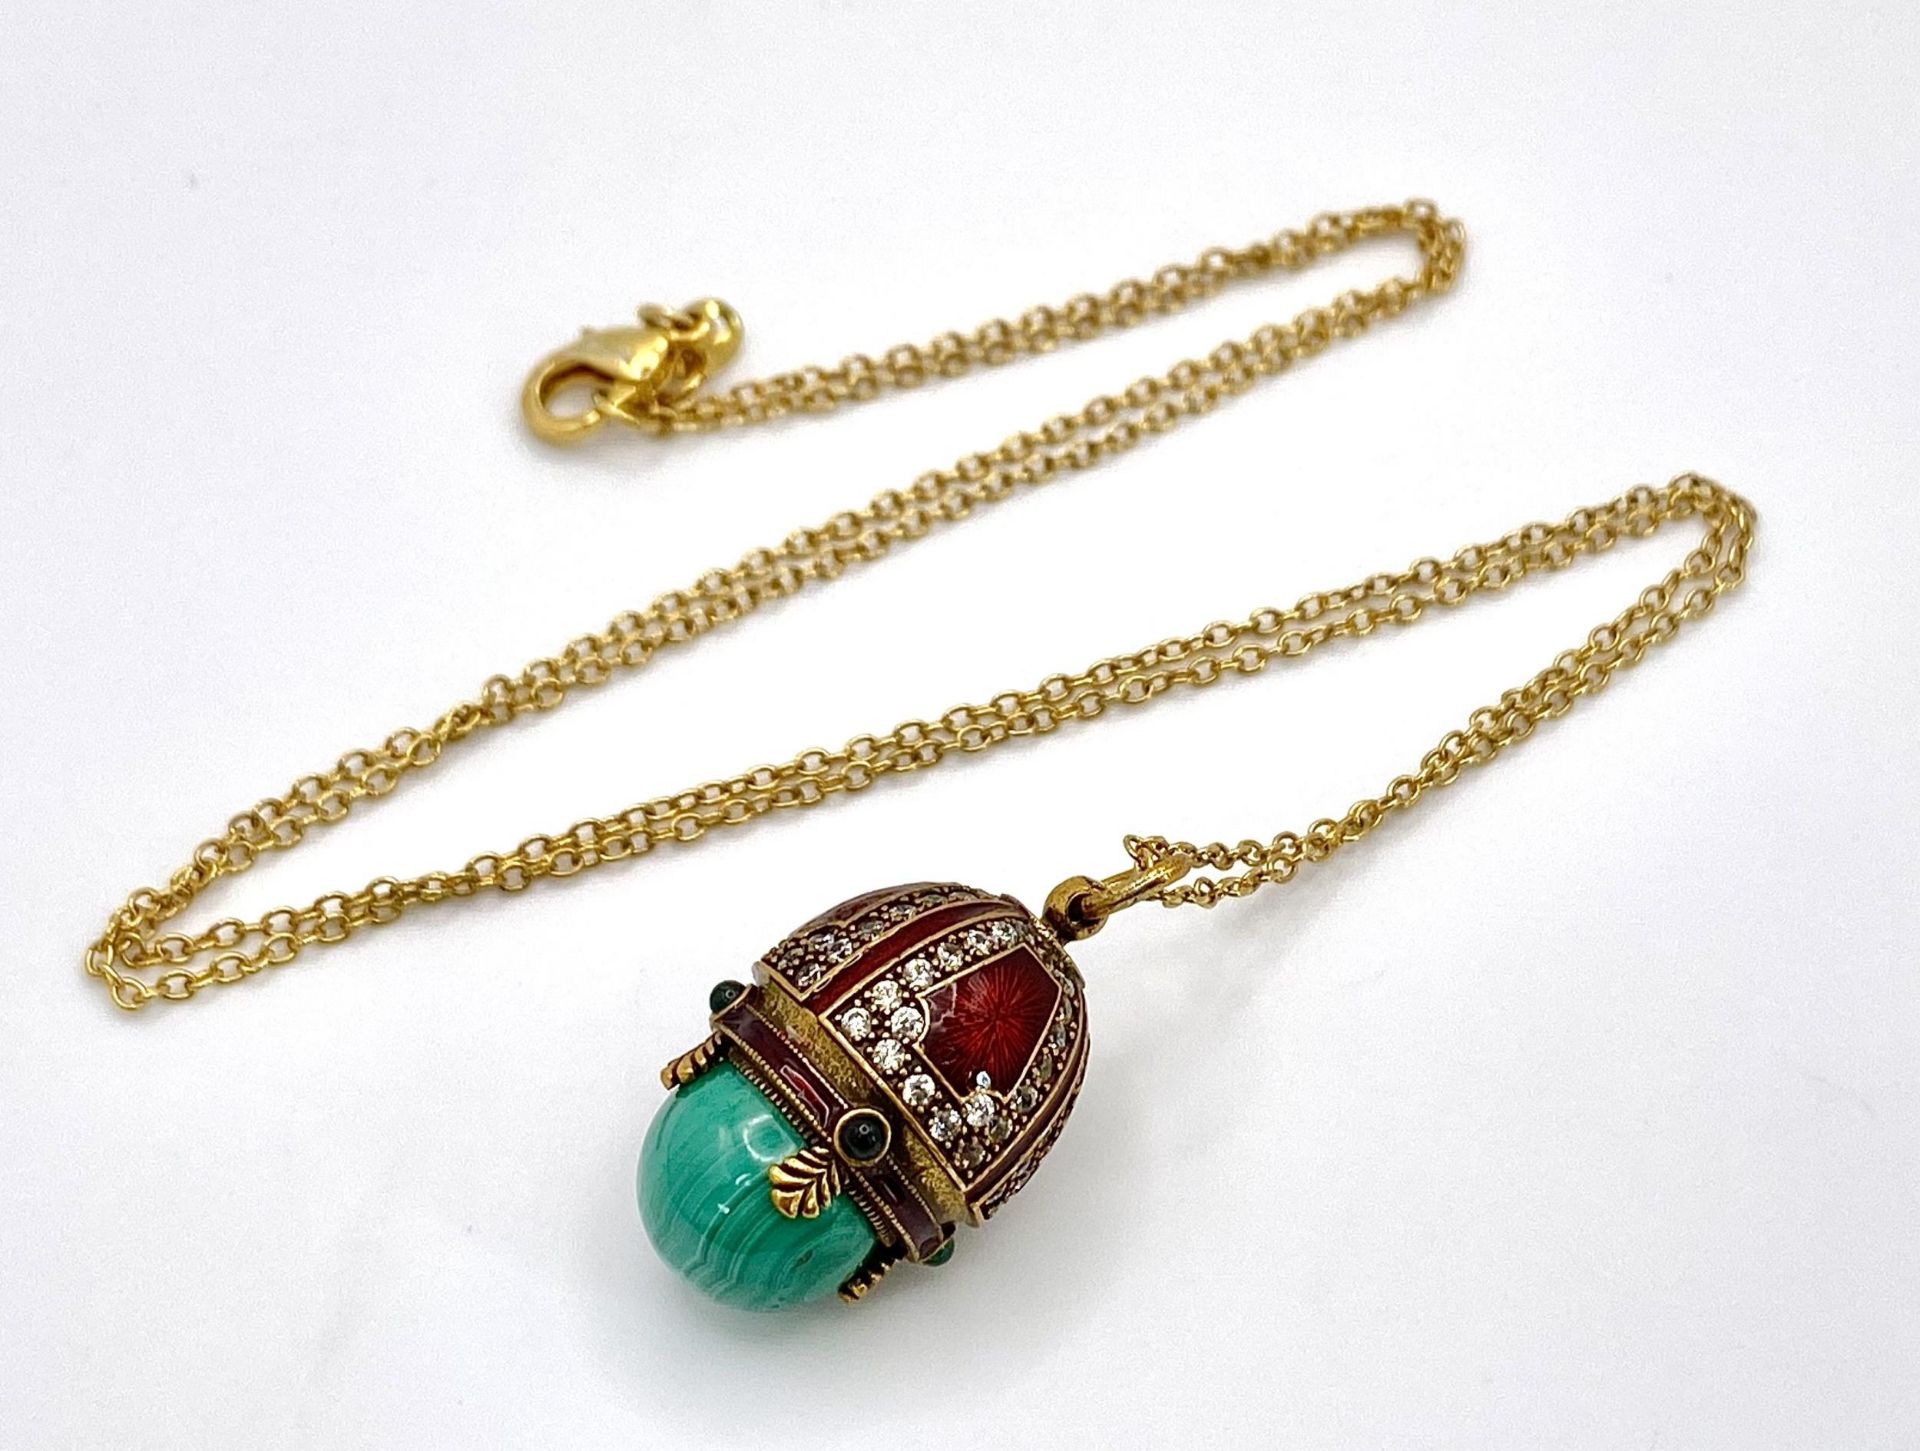 A Vintage, Imperial Russian Design, Silver Gilt Gem Set Egg Pendant Necklace. Russian Impression